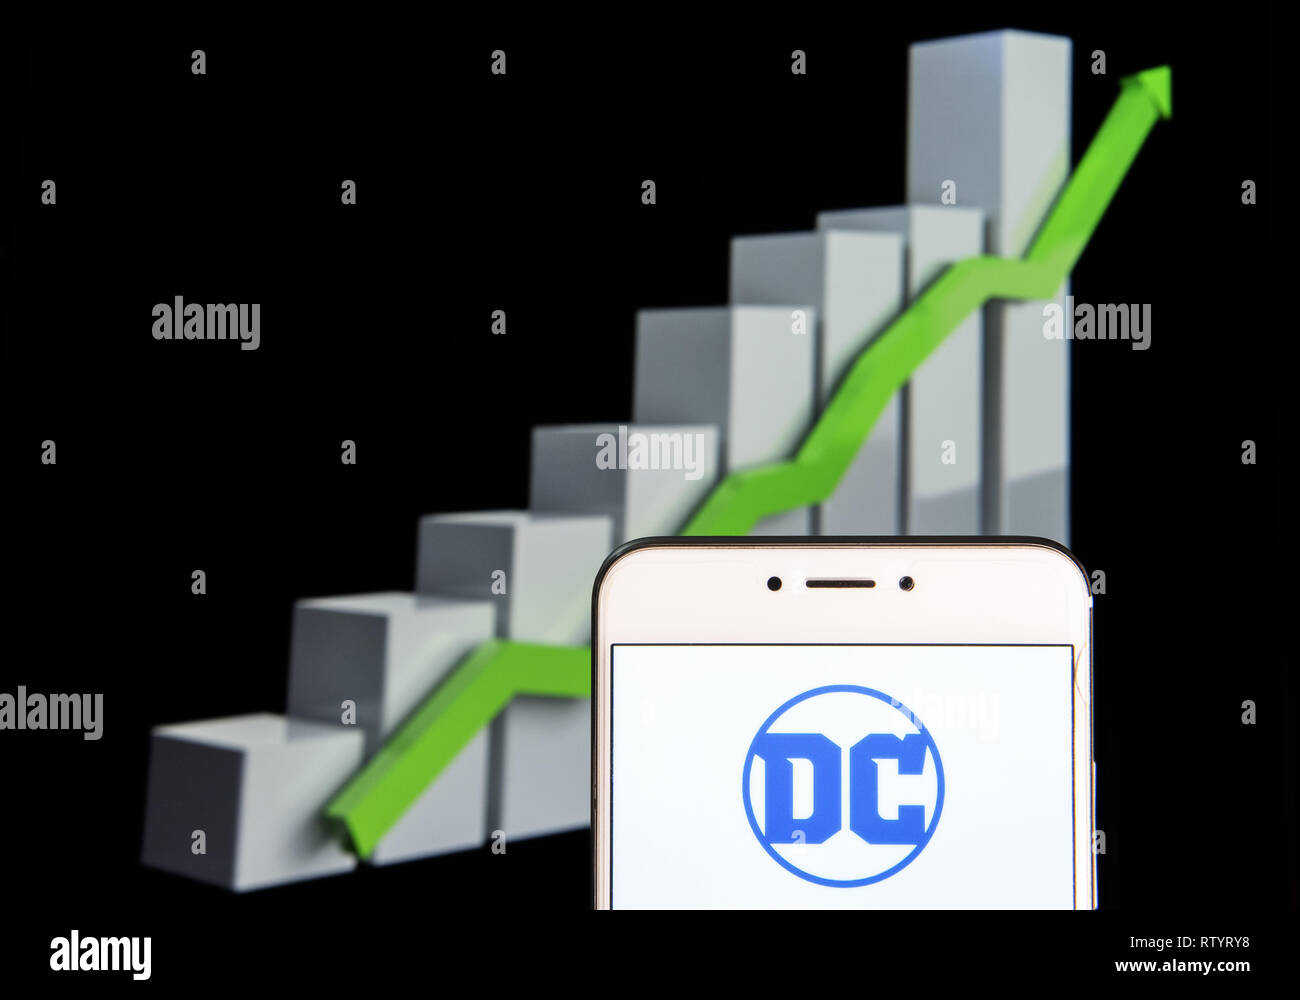 Dc Comics Stock Chart